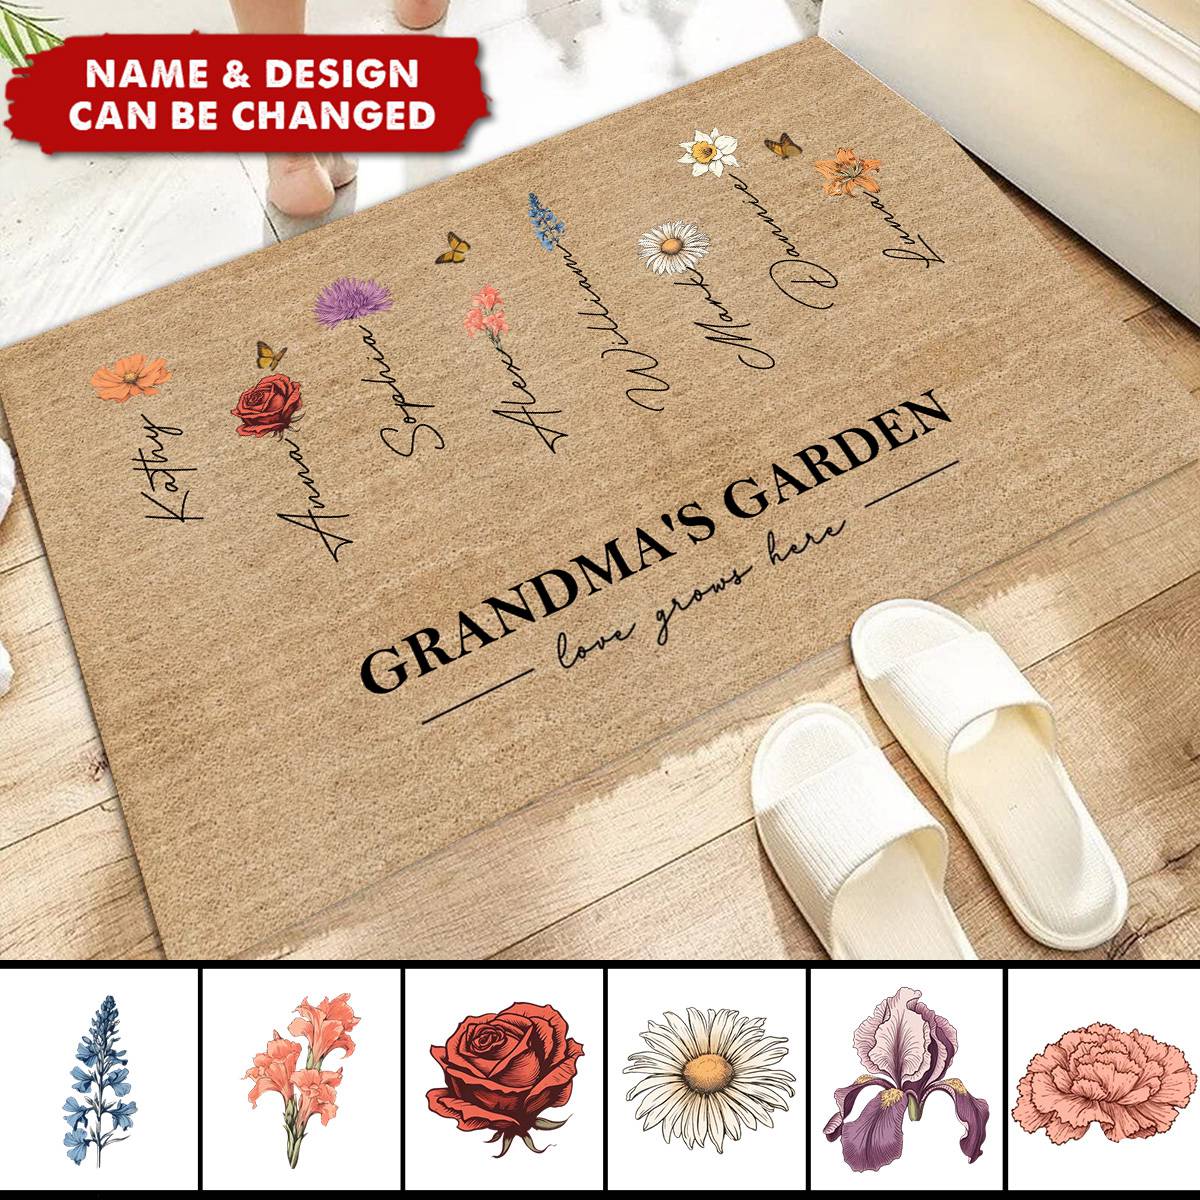 Grandma‘s Garden Love Grows Here Vintage Birth Flowers - Personalized Doormat